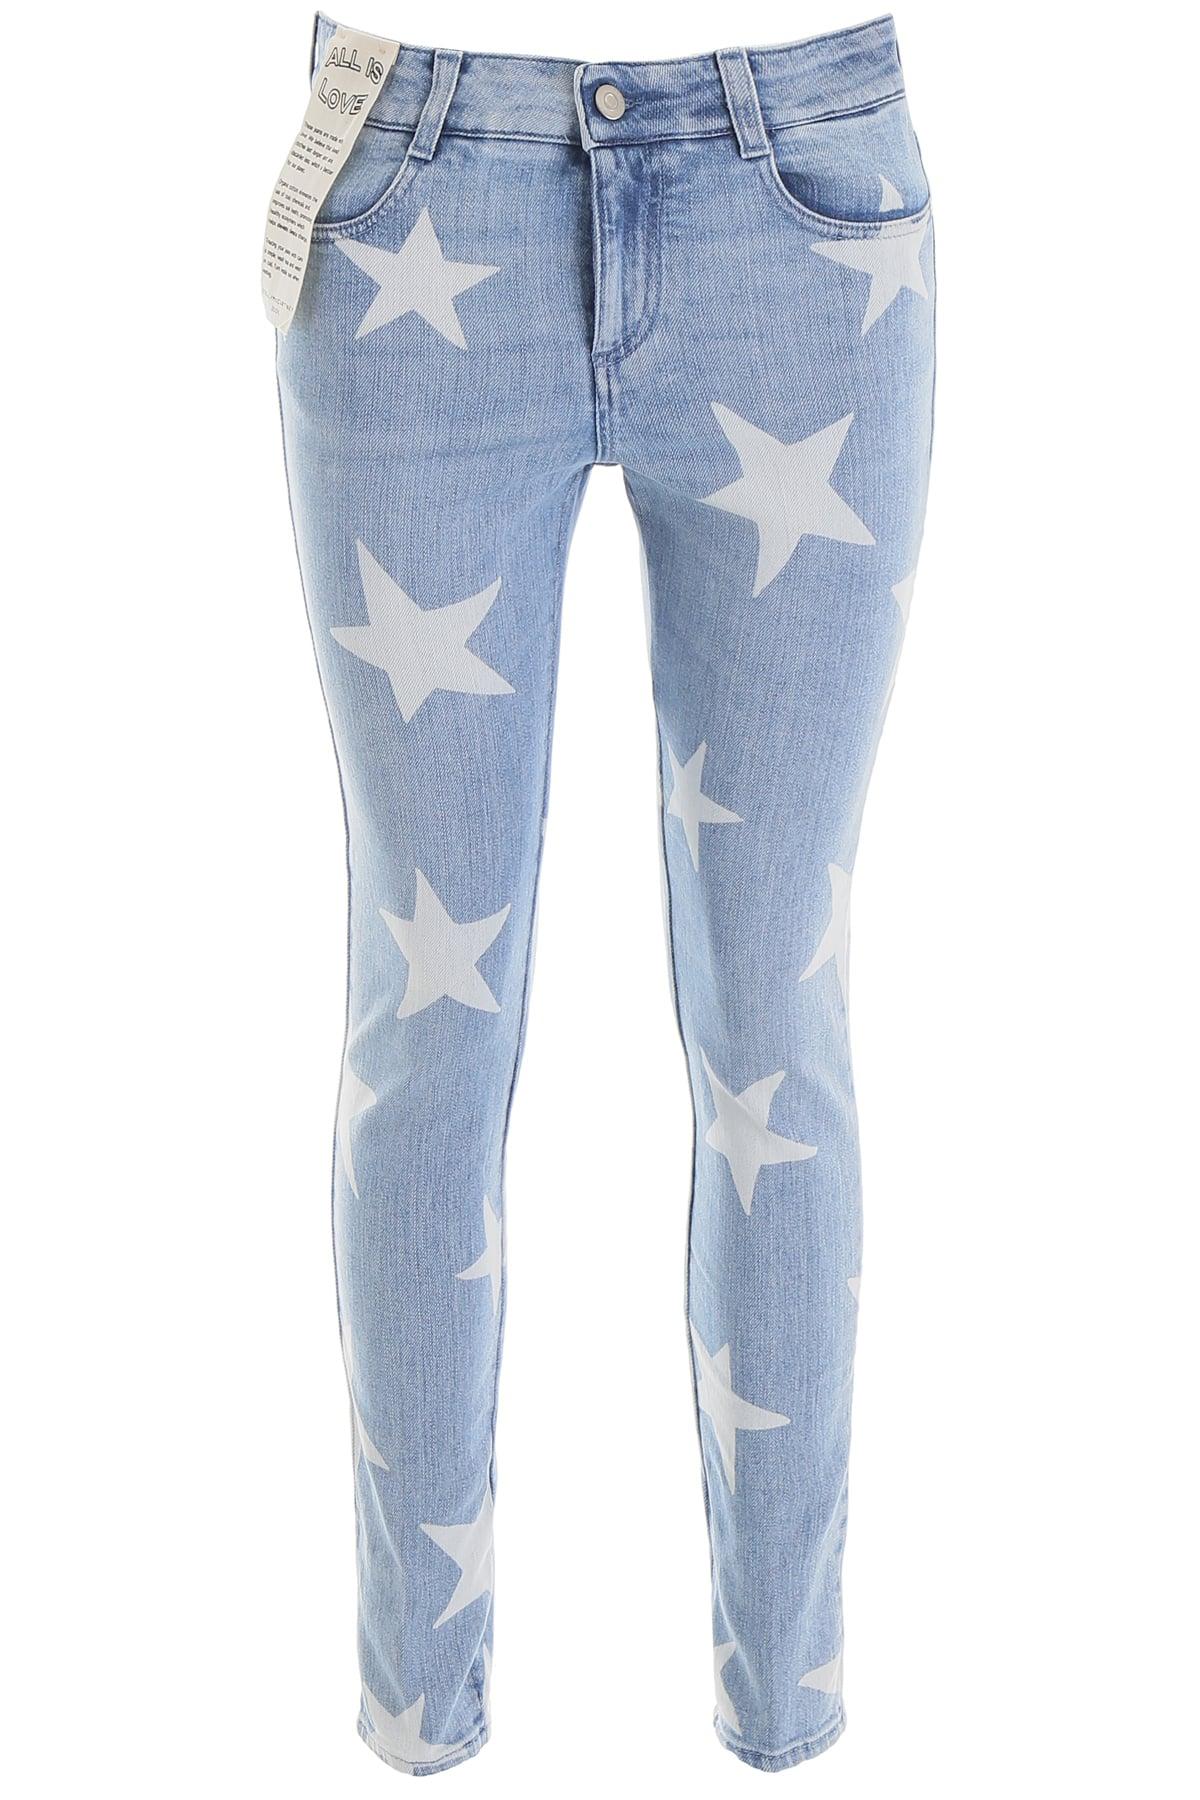 Stella Mccartney Denim Star Print Jeans In Light Bluewhite Blue Lyst